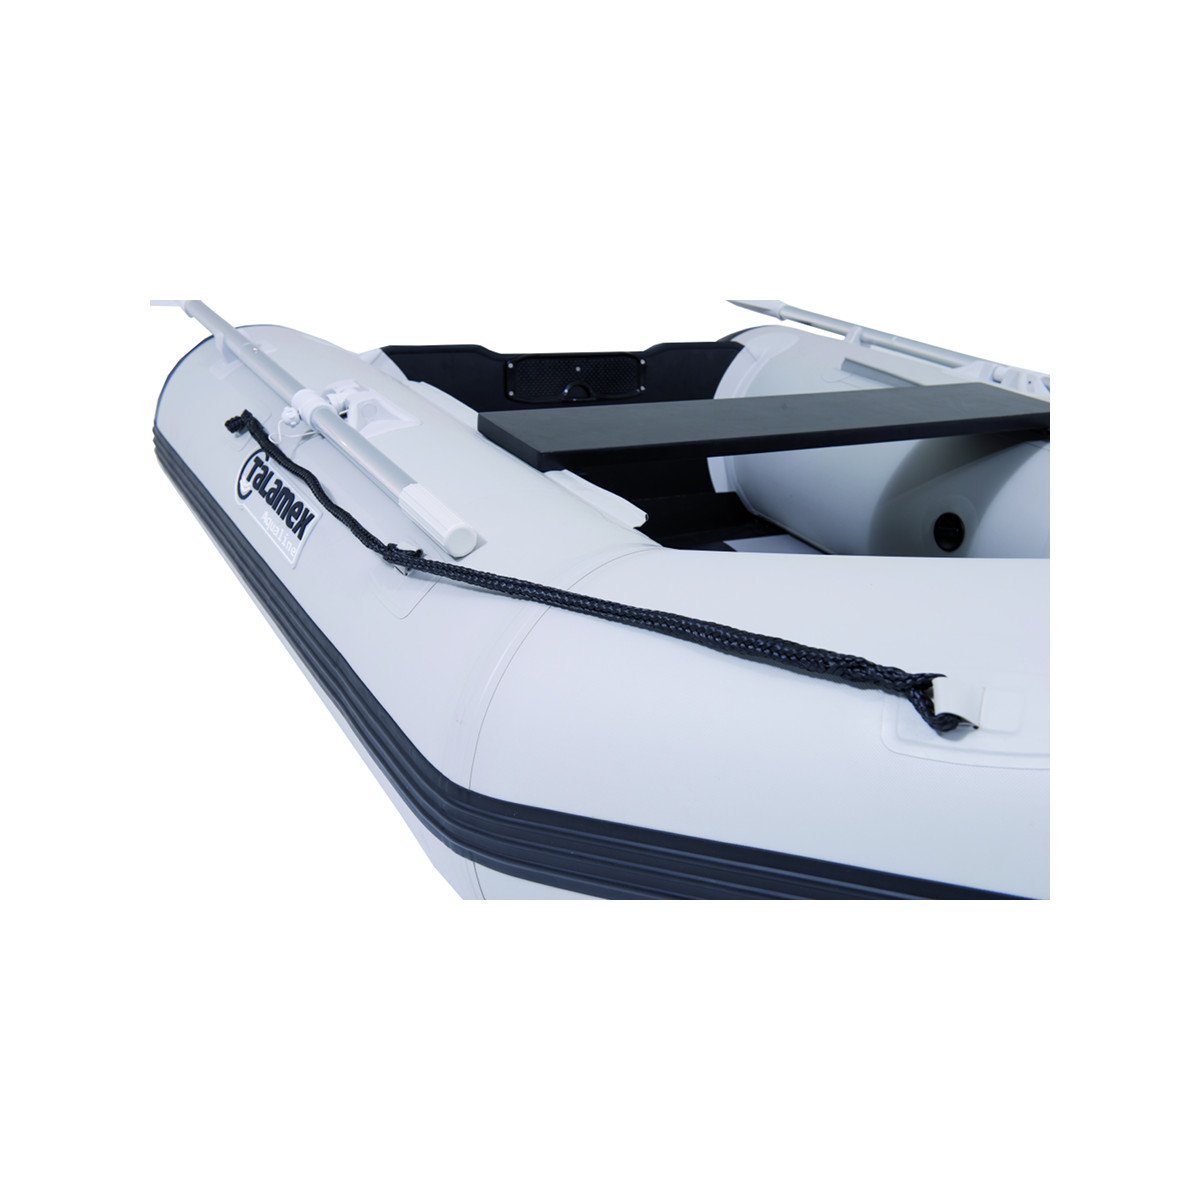 Talamex Aqualine QLA270 opblaasbare rubberboot met opblaasbare bodem, lengte 2,70m, lengte 2,70m, grijs